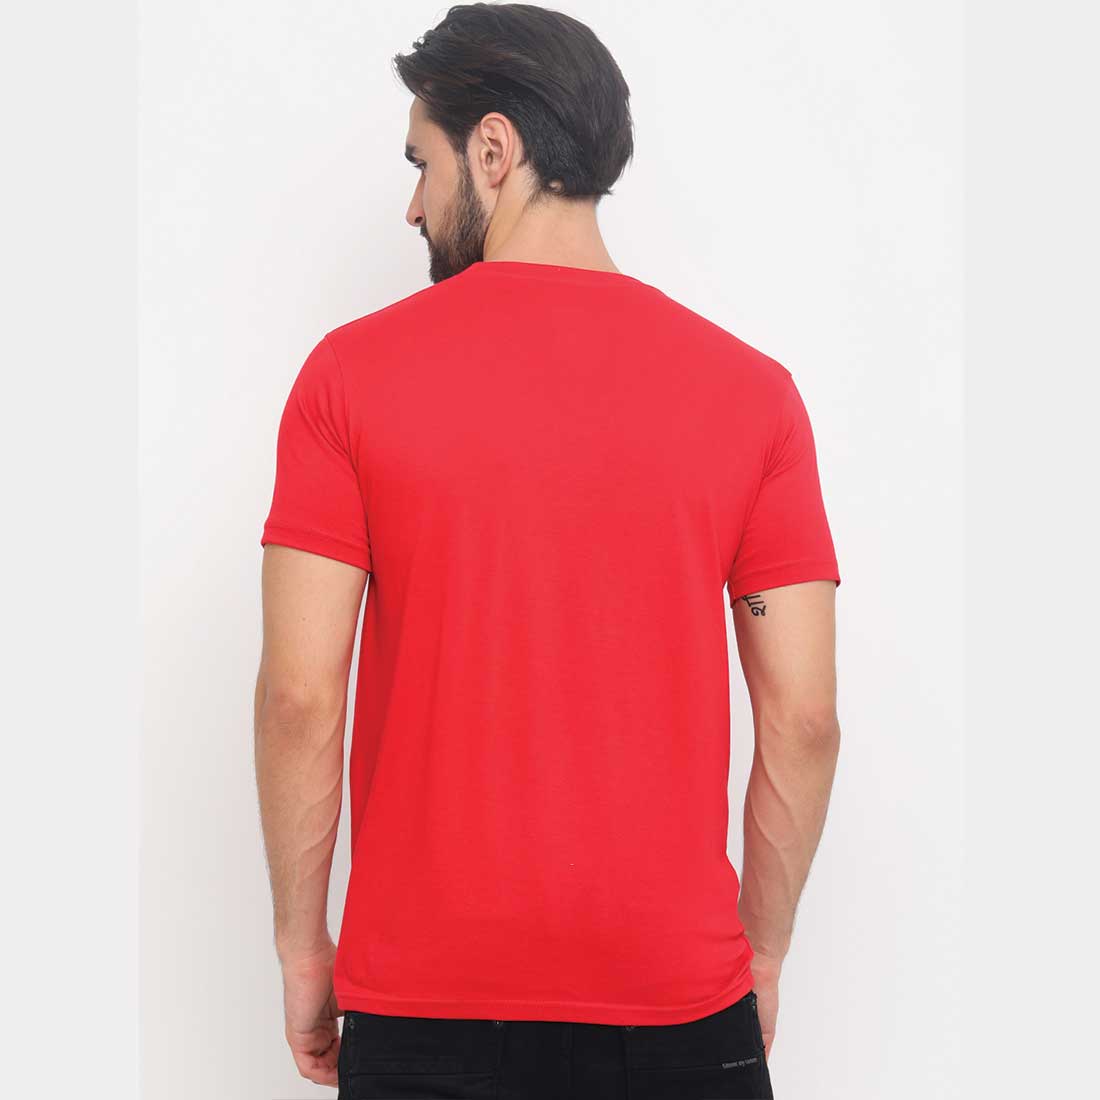 bulk custom tshirts seller in kolkata #color_red